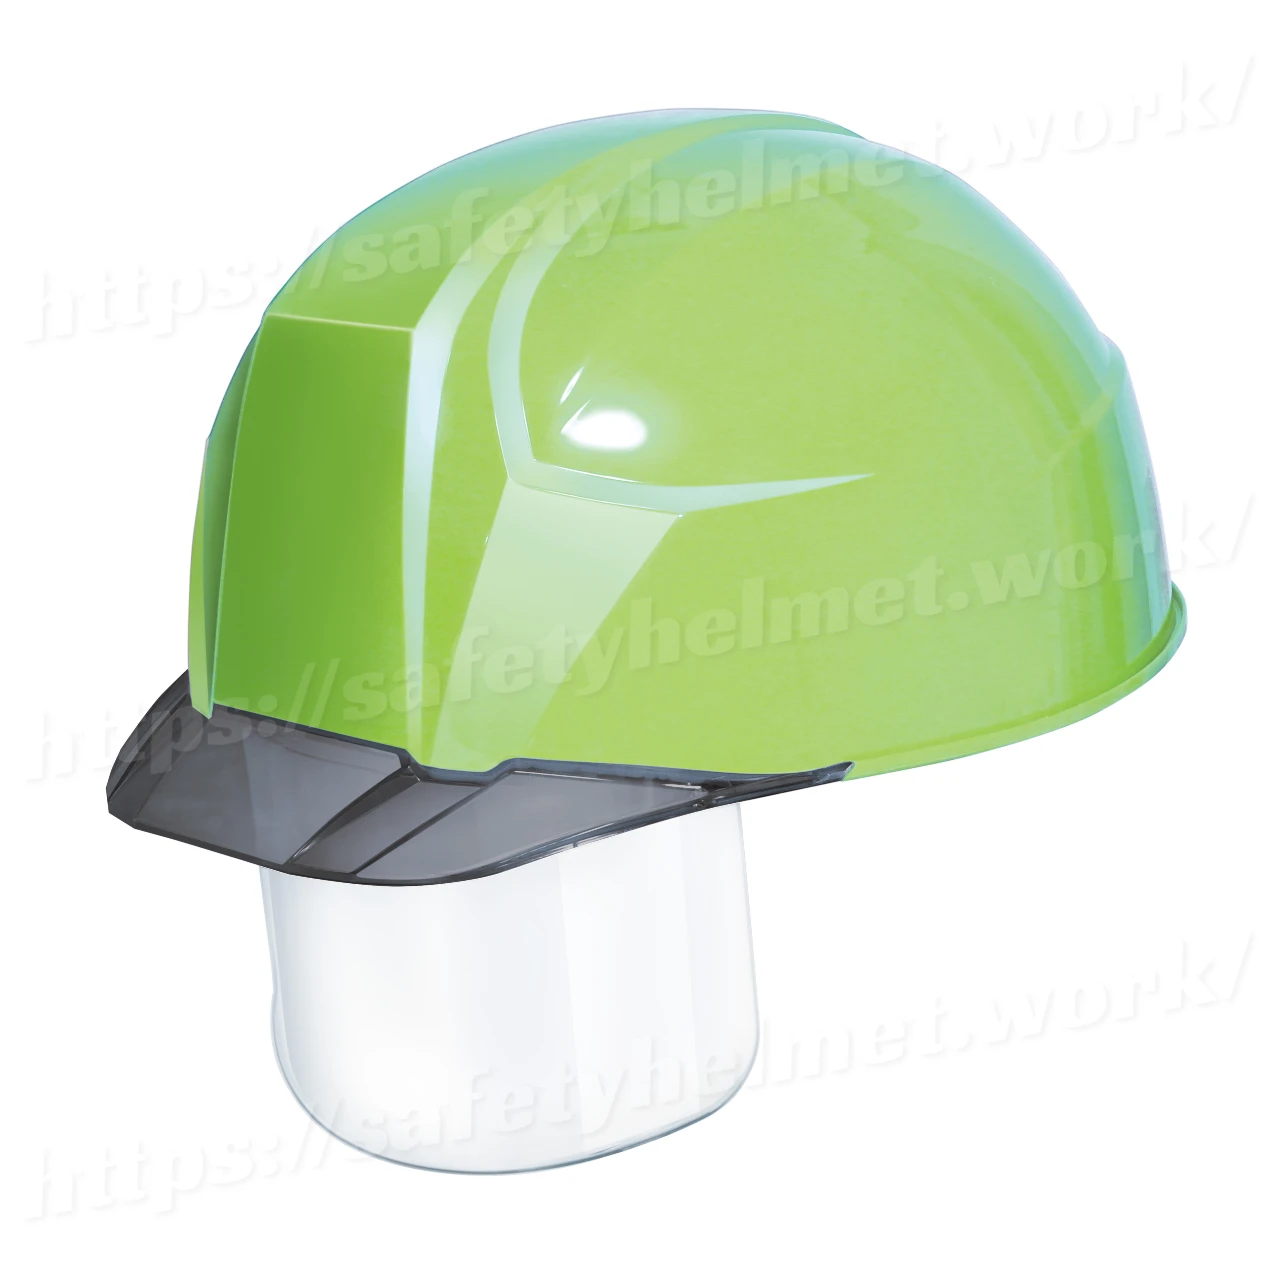 dic-helmet-lightest-shield-aa23cs-freshgreen-smoke